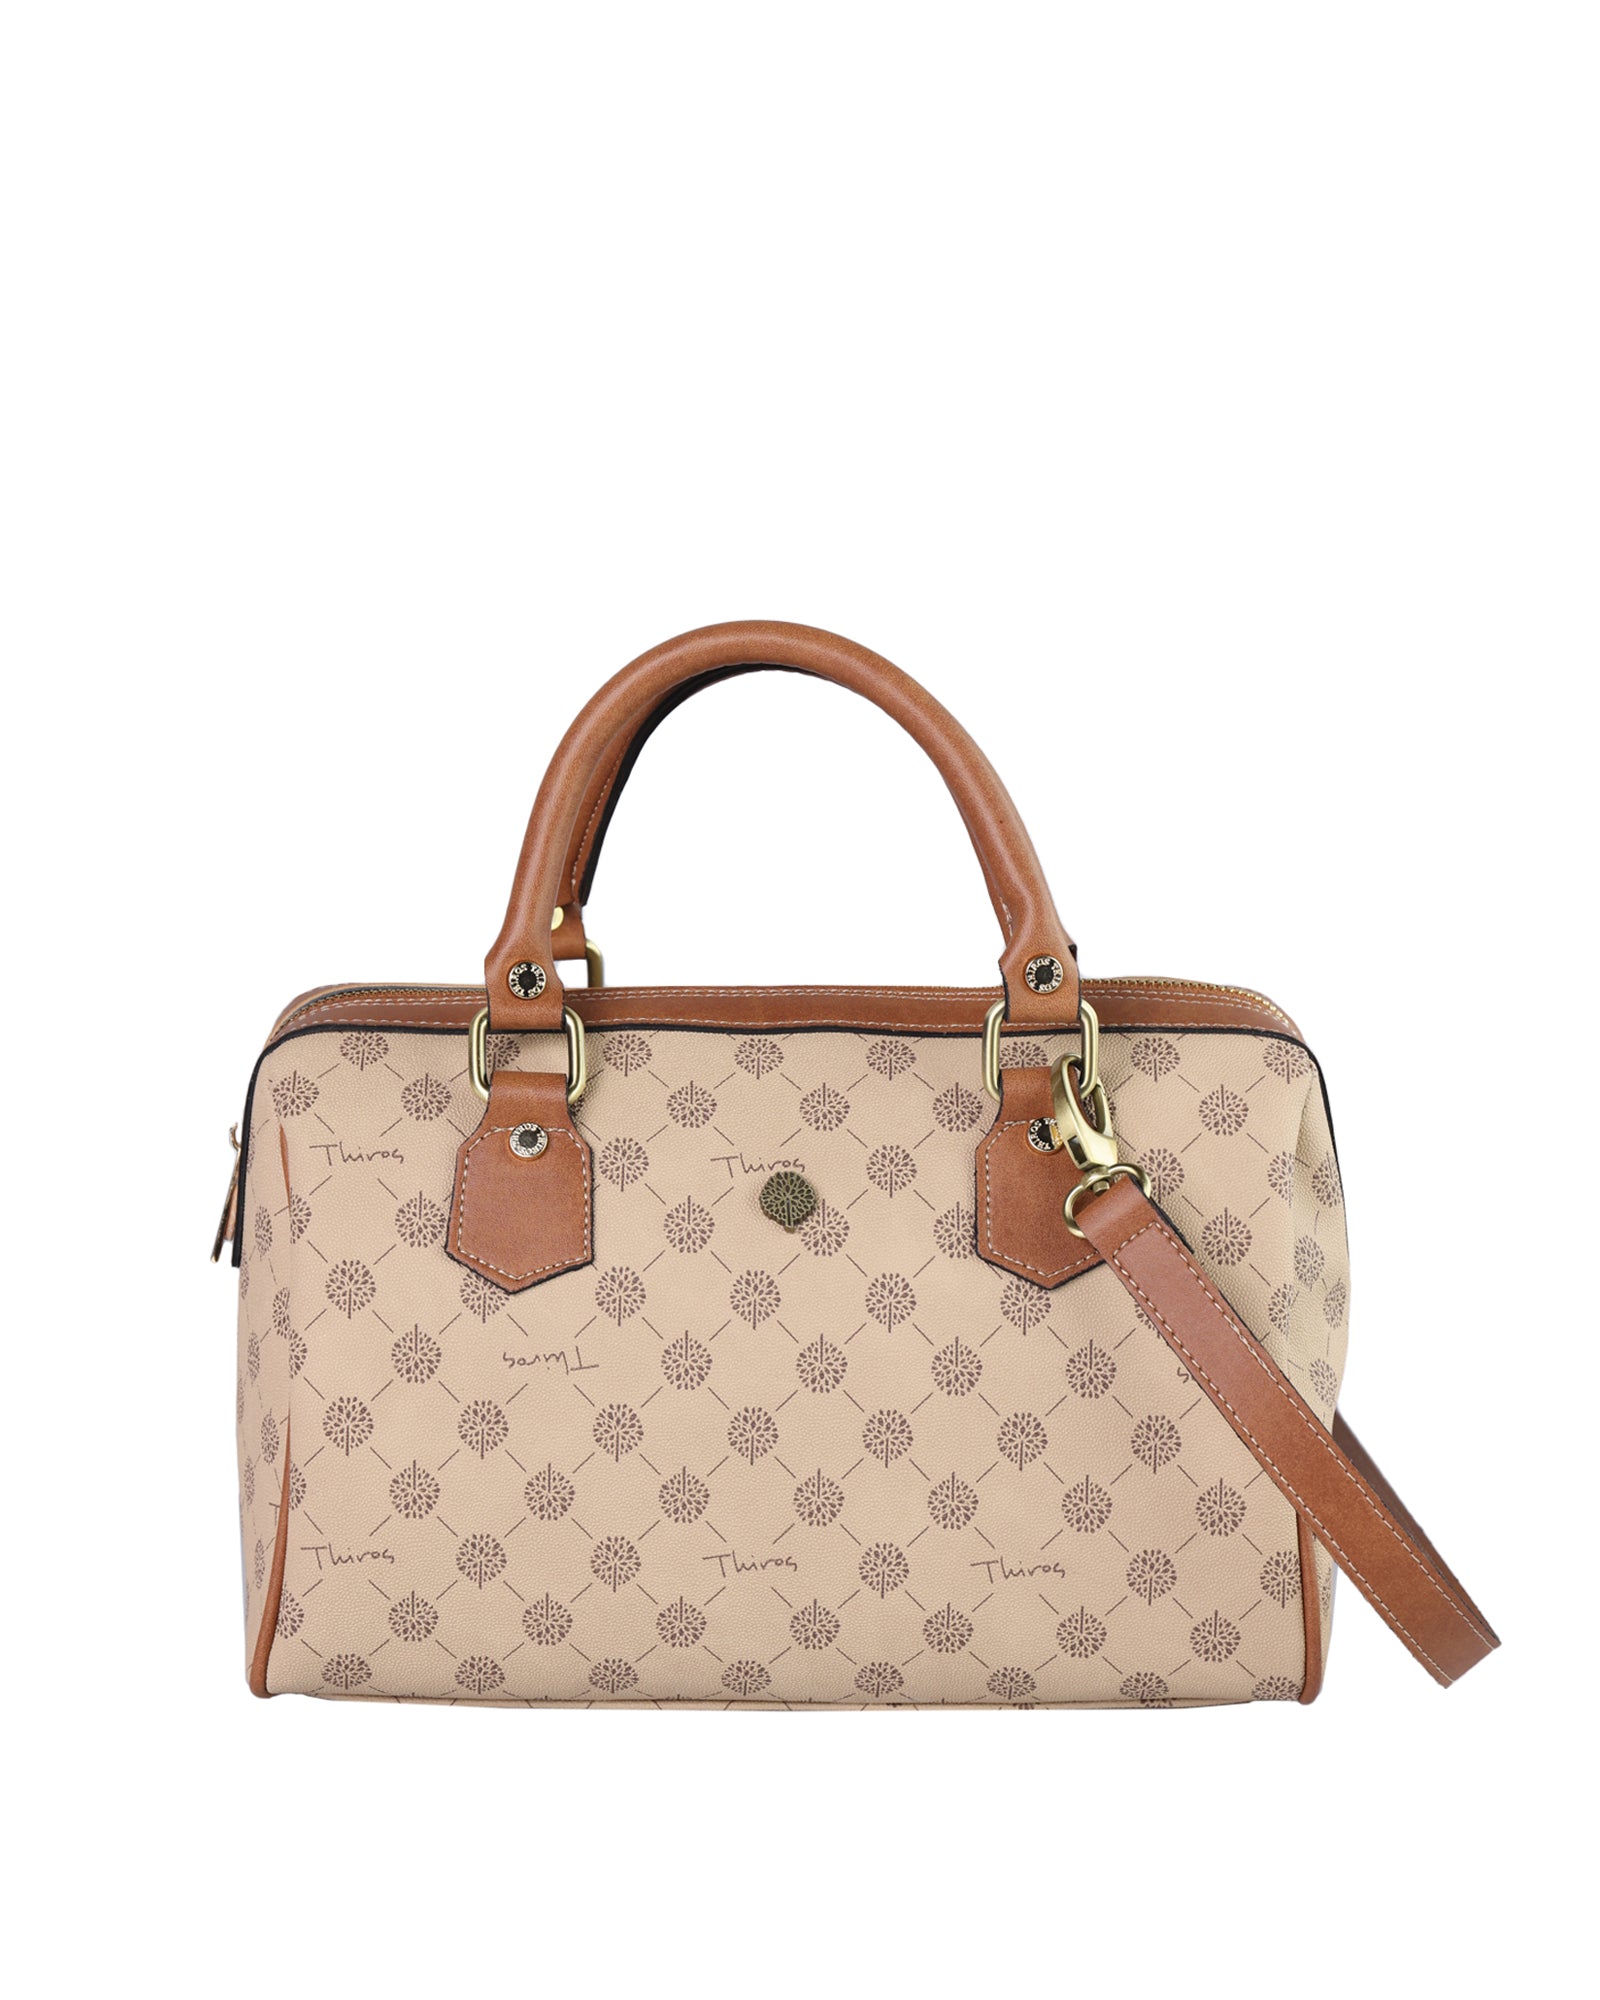 Vintage Olivia strap handbag